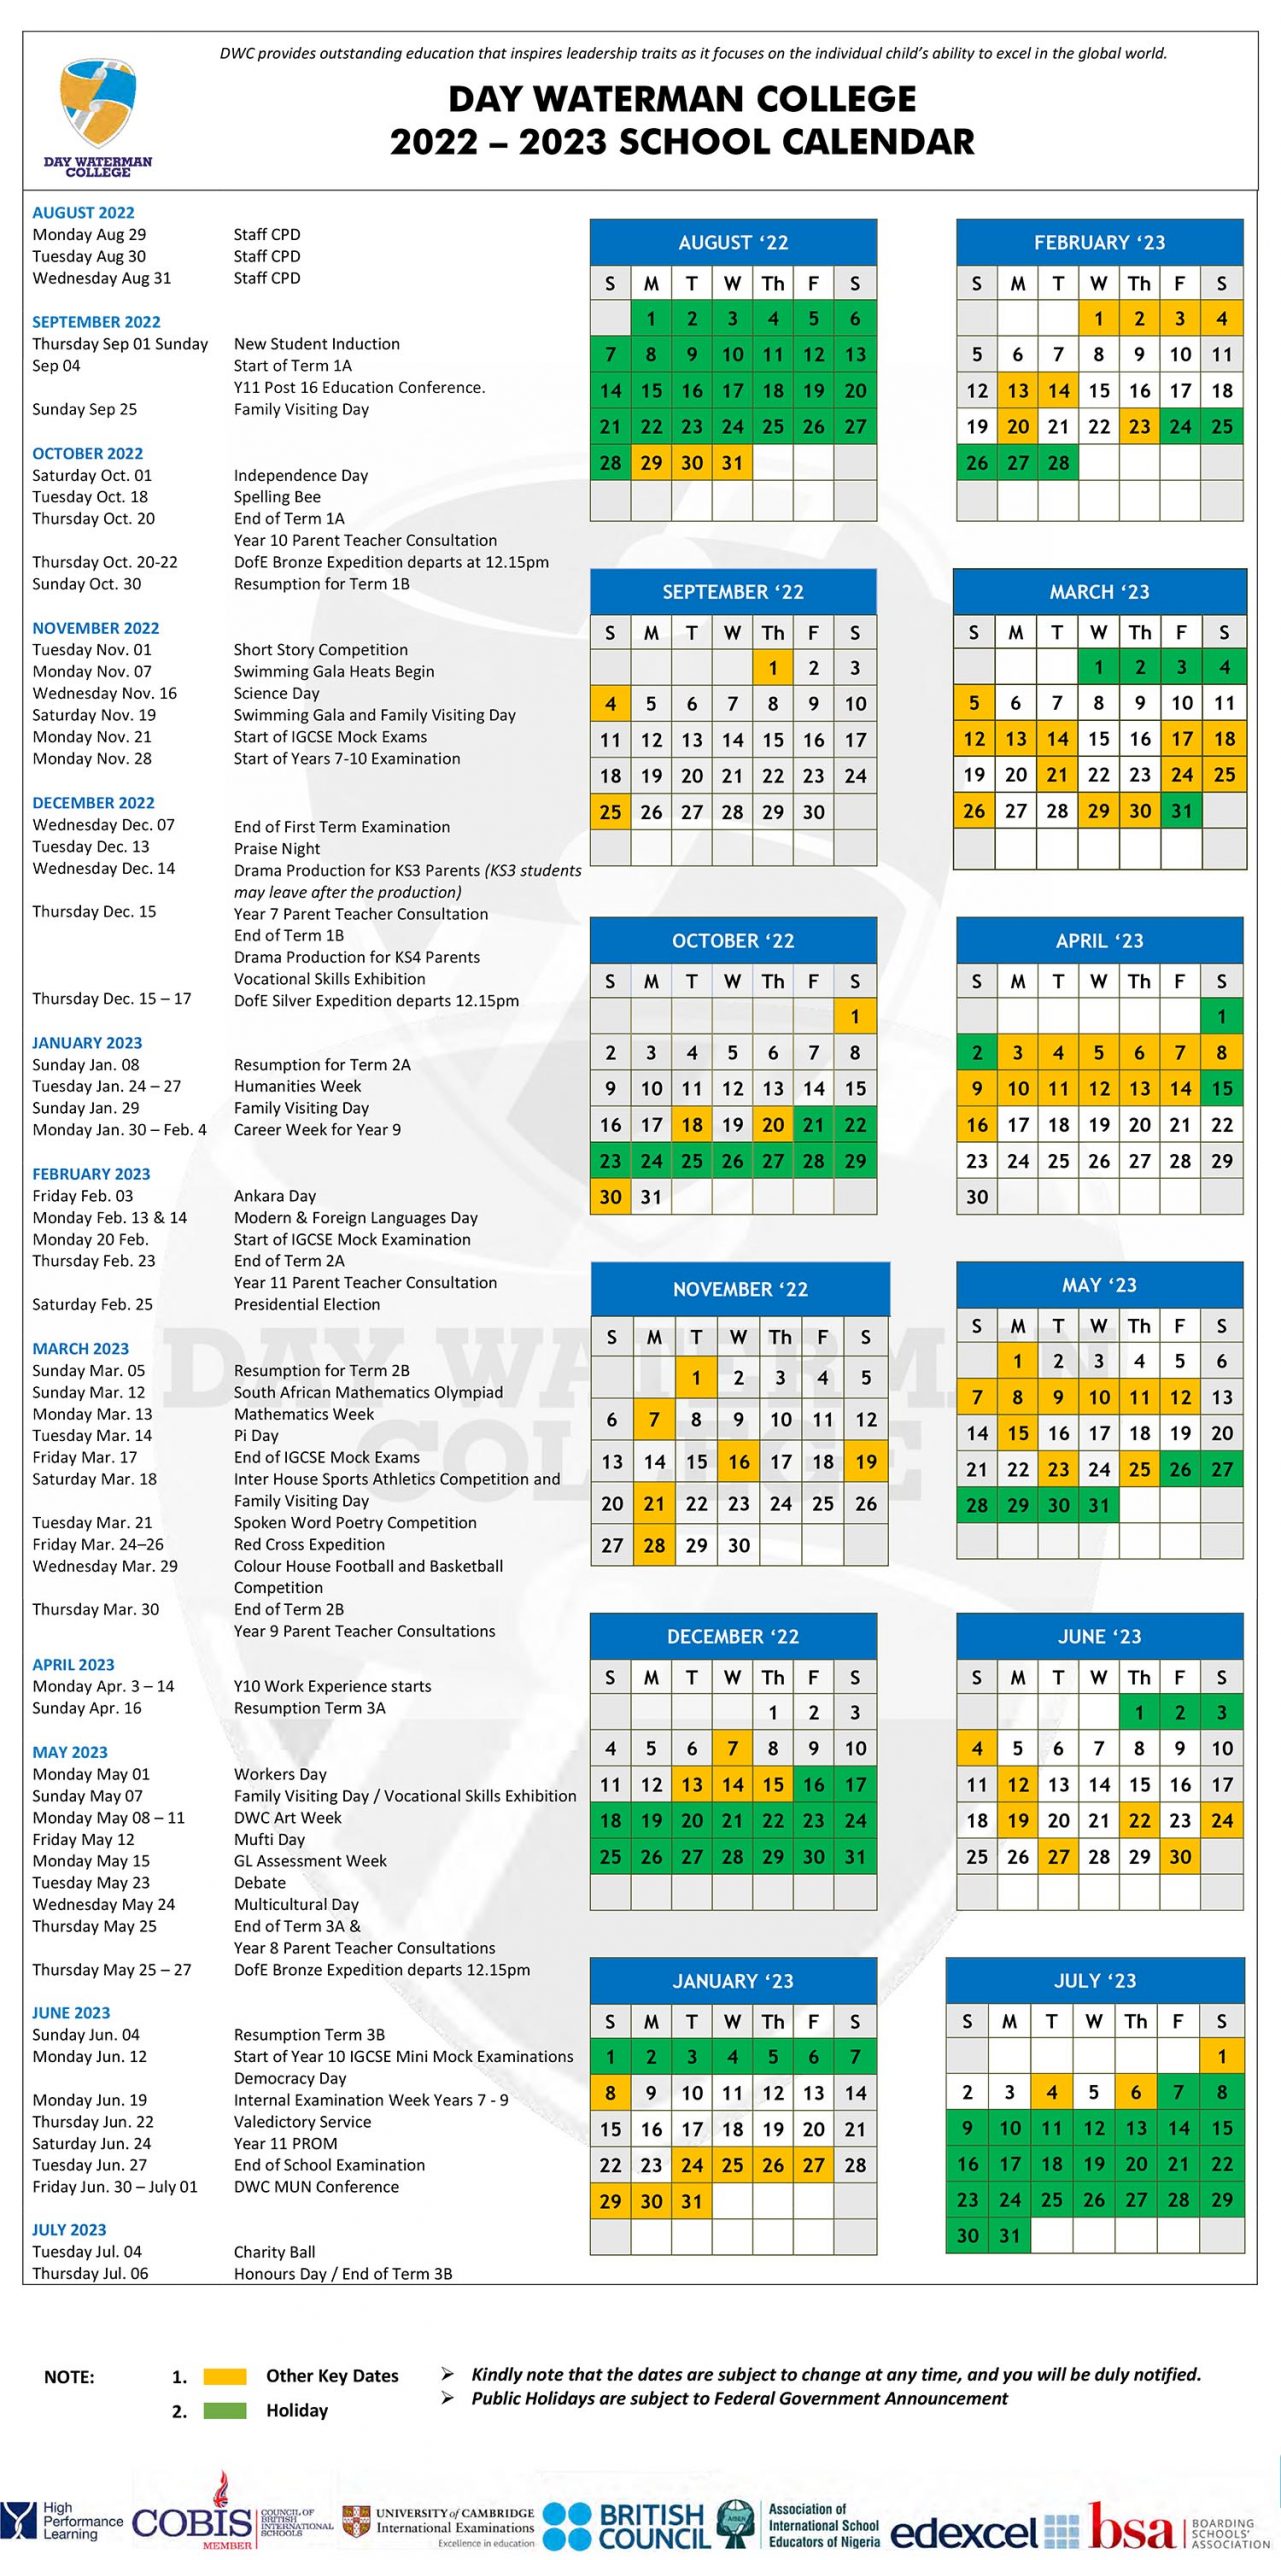 School Calendar – Day Waterman College